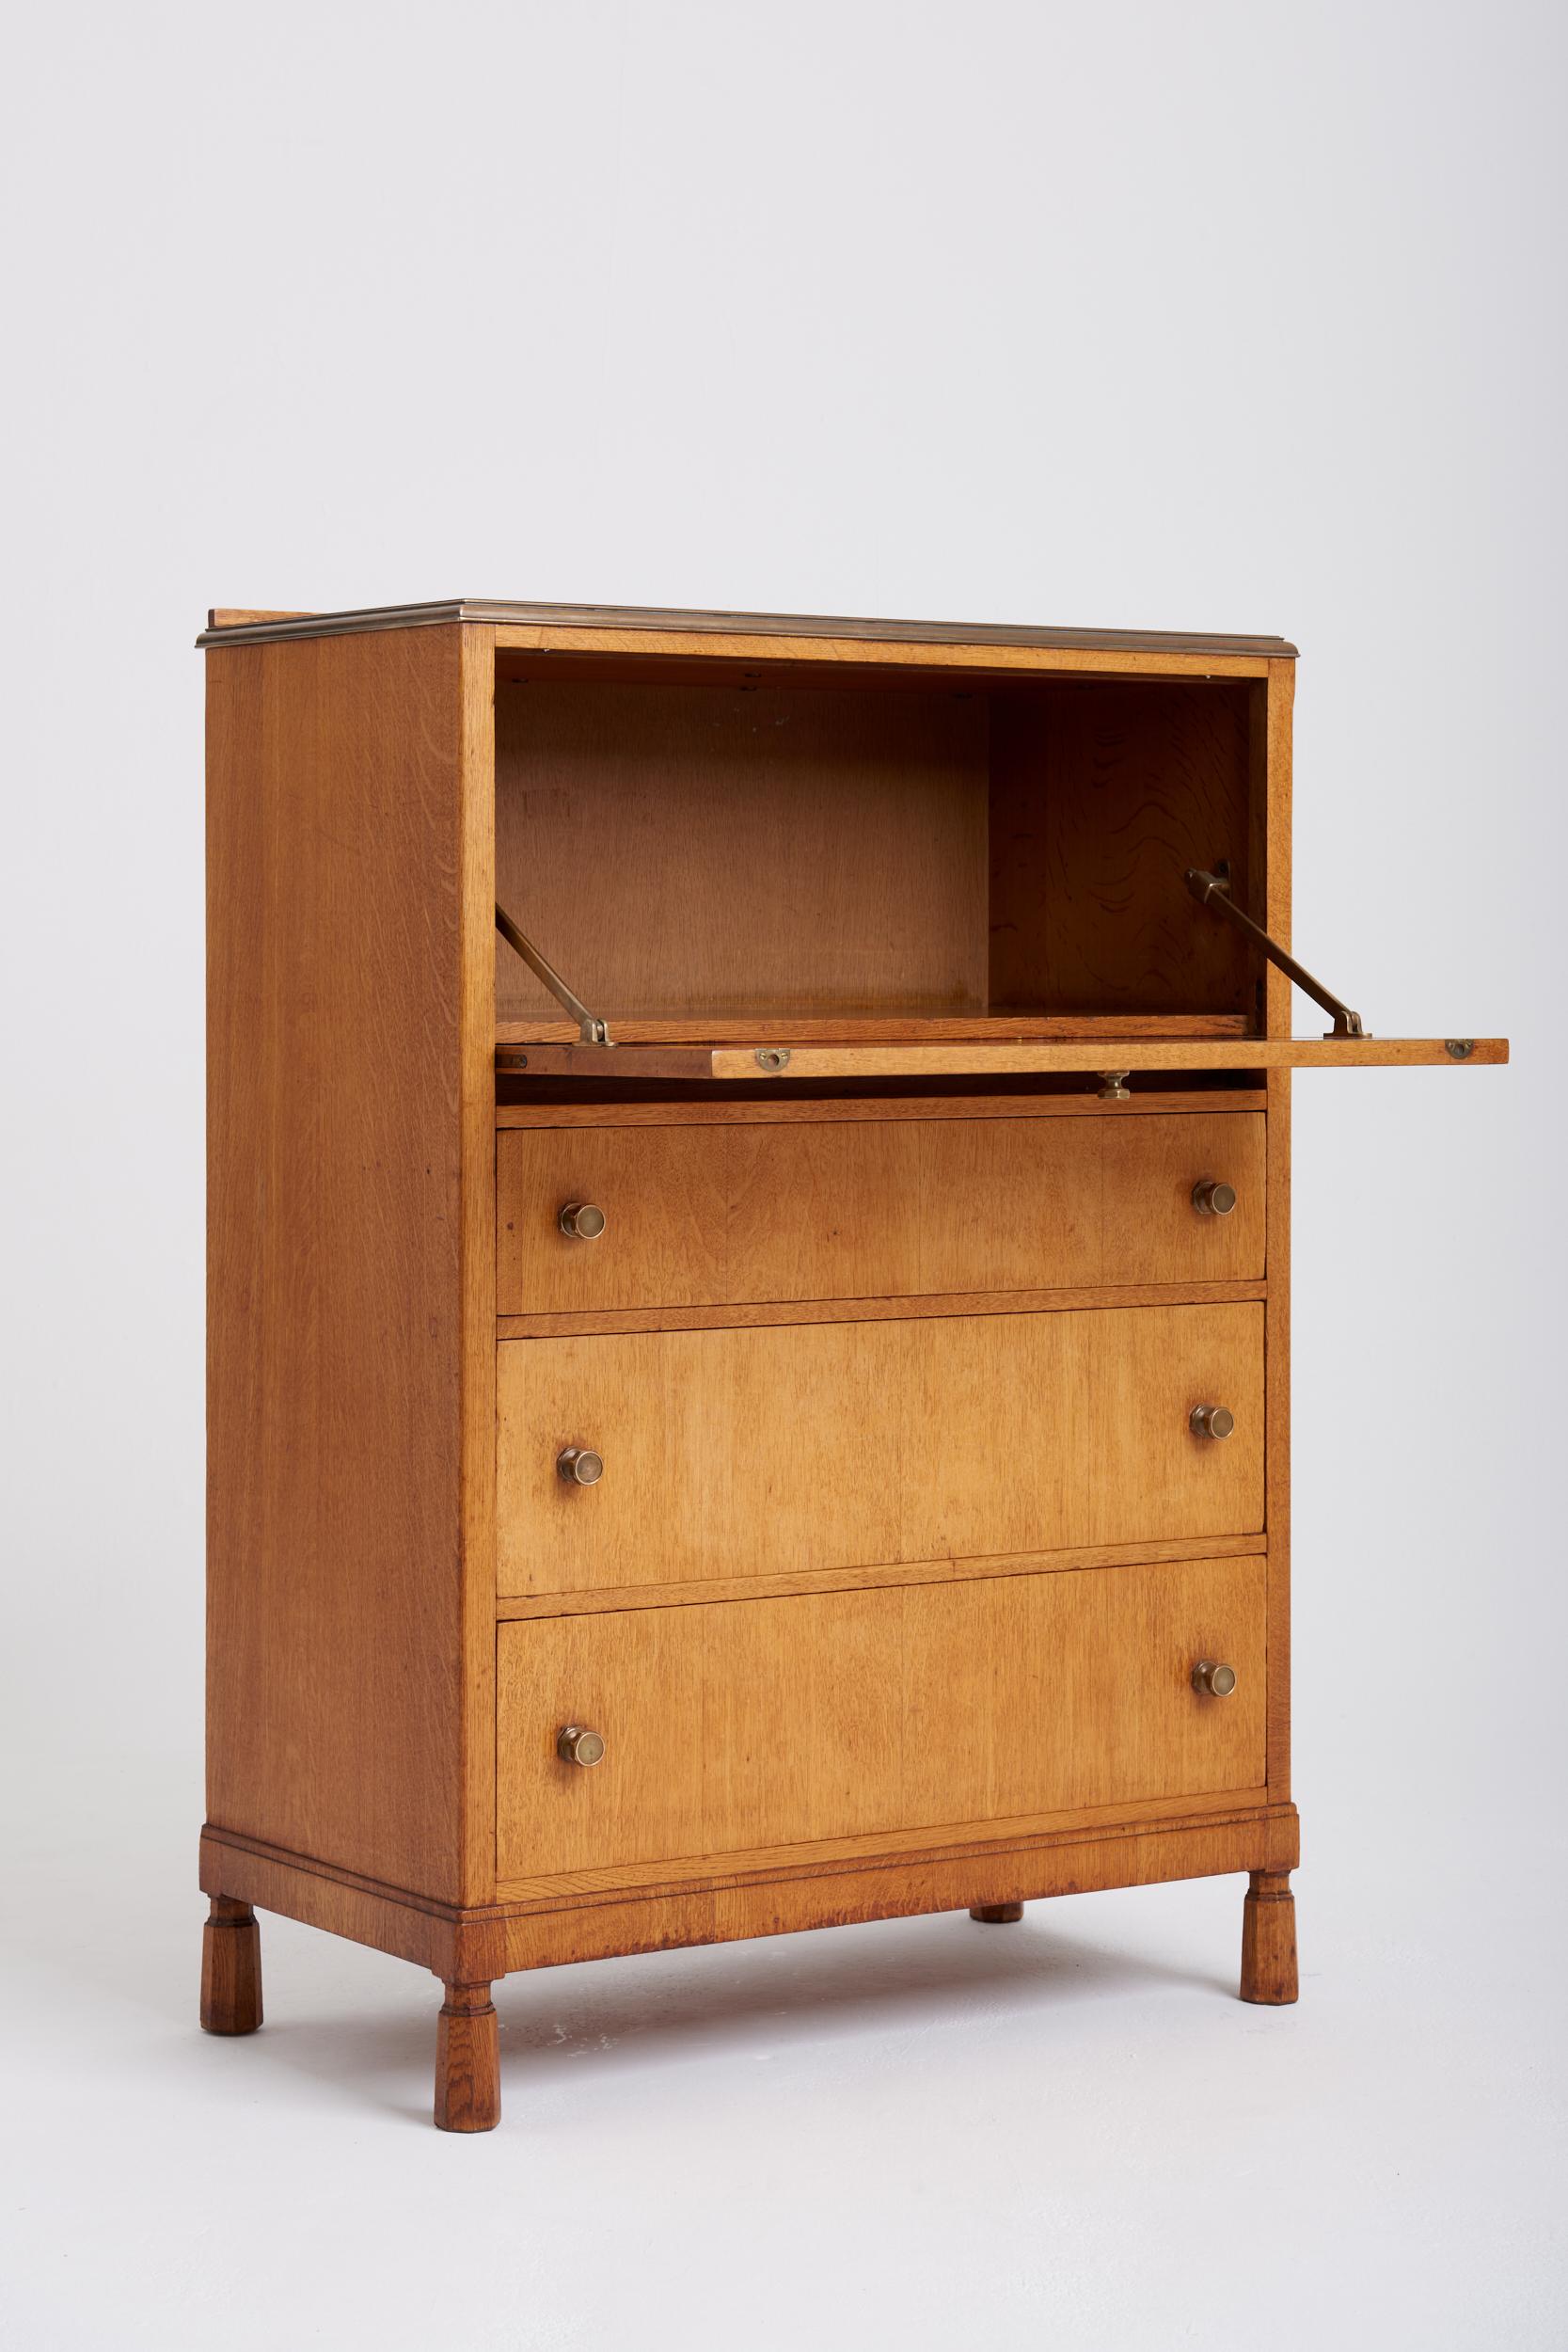 20th Century Arts & Craft Oak Secretaire Cabinet by Morris of Glasgow